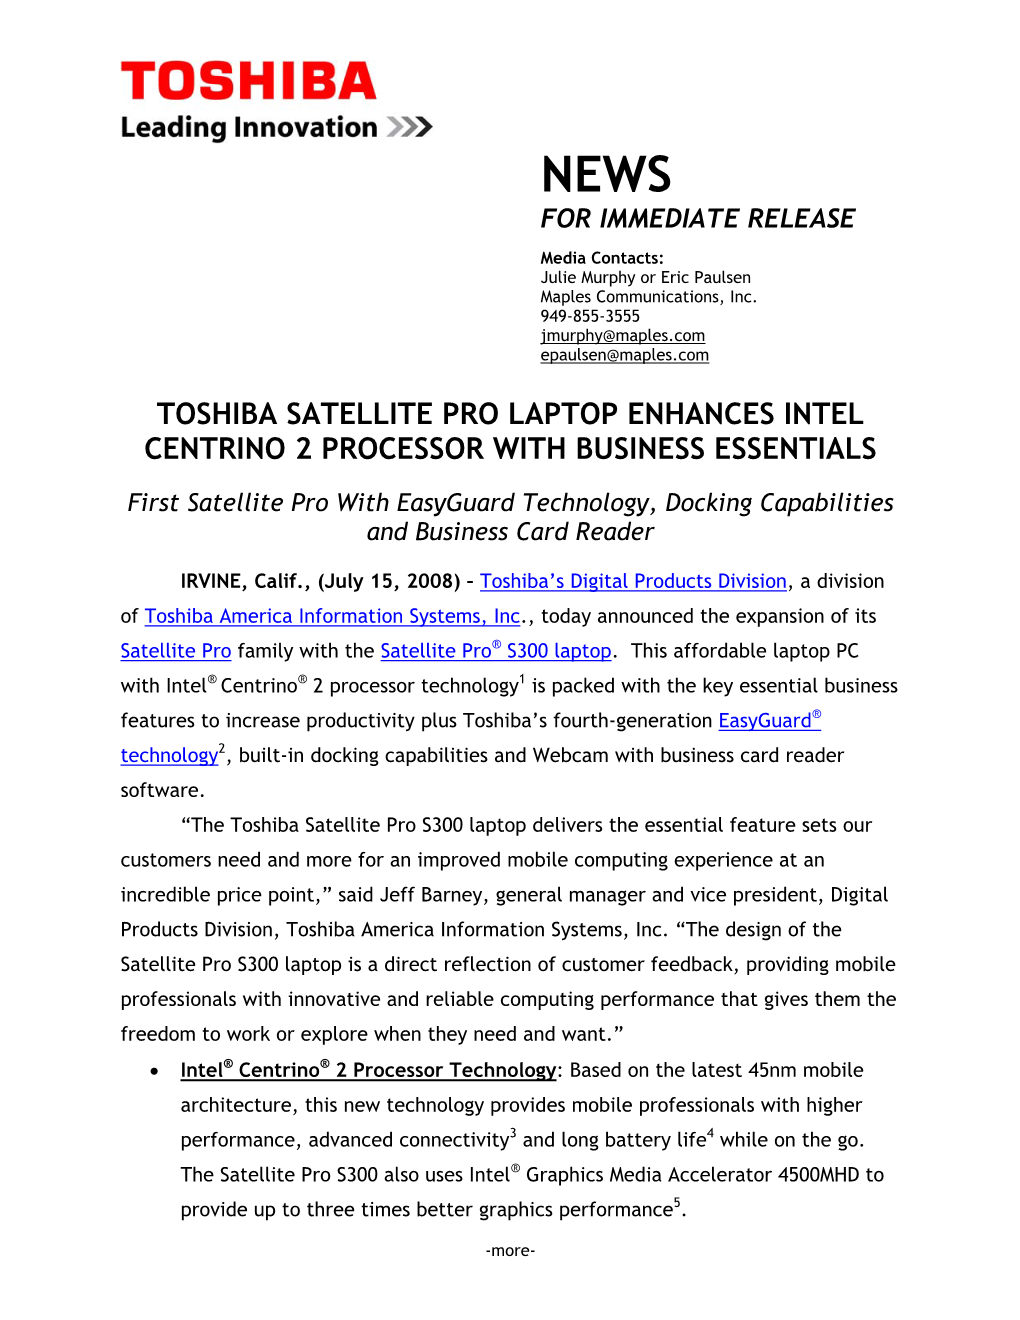 Toshiba Satellite Pro Laptop Enhances Intel Centrino 2 Processor with Business Essentials